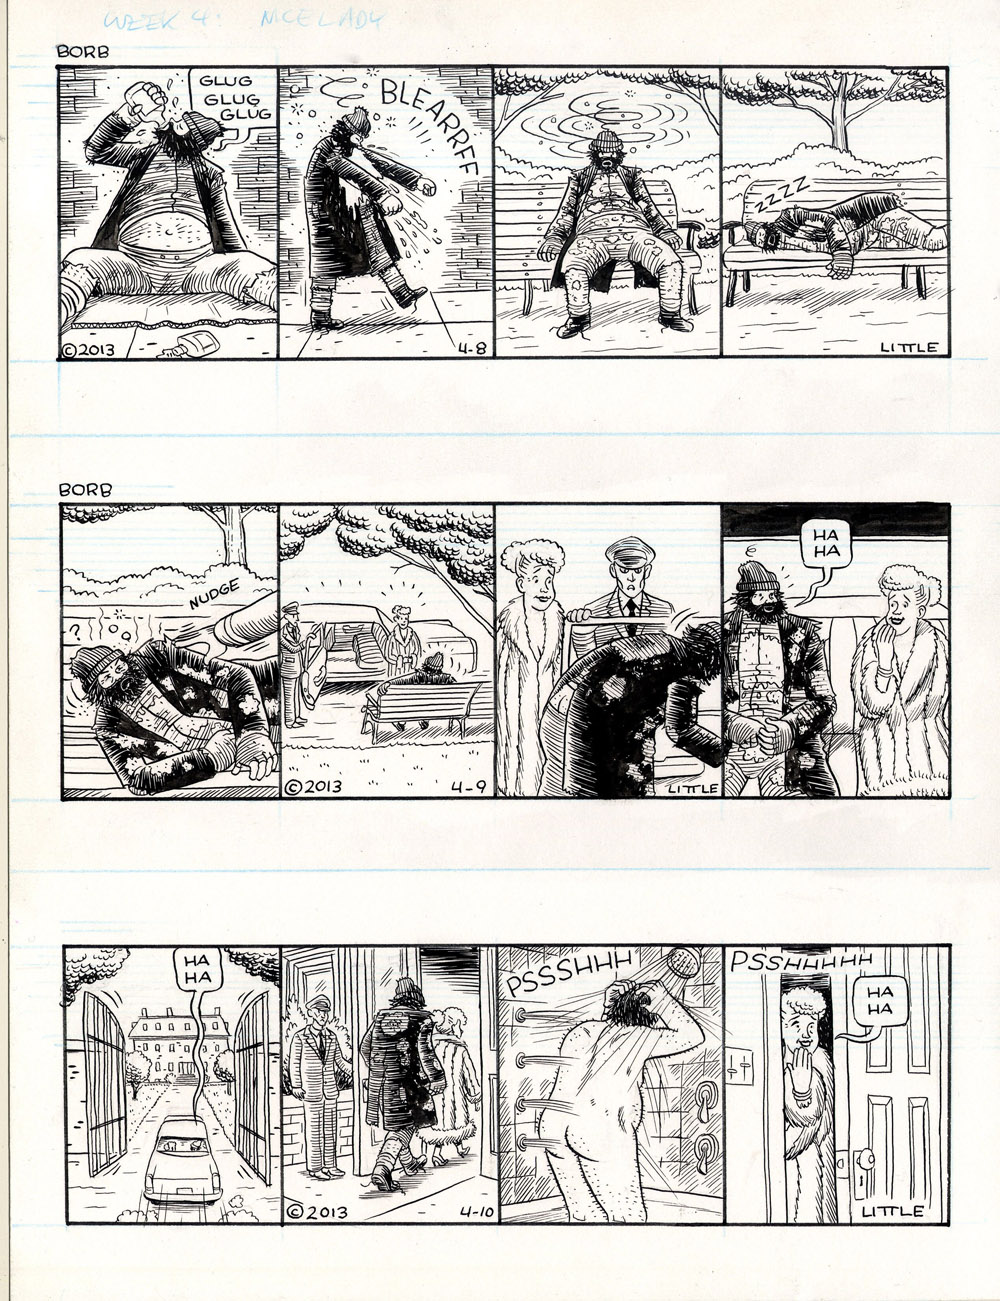 Borb - page 27-29